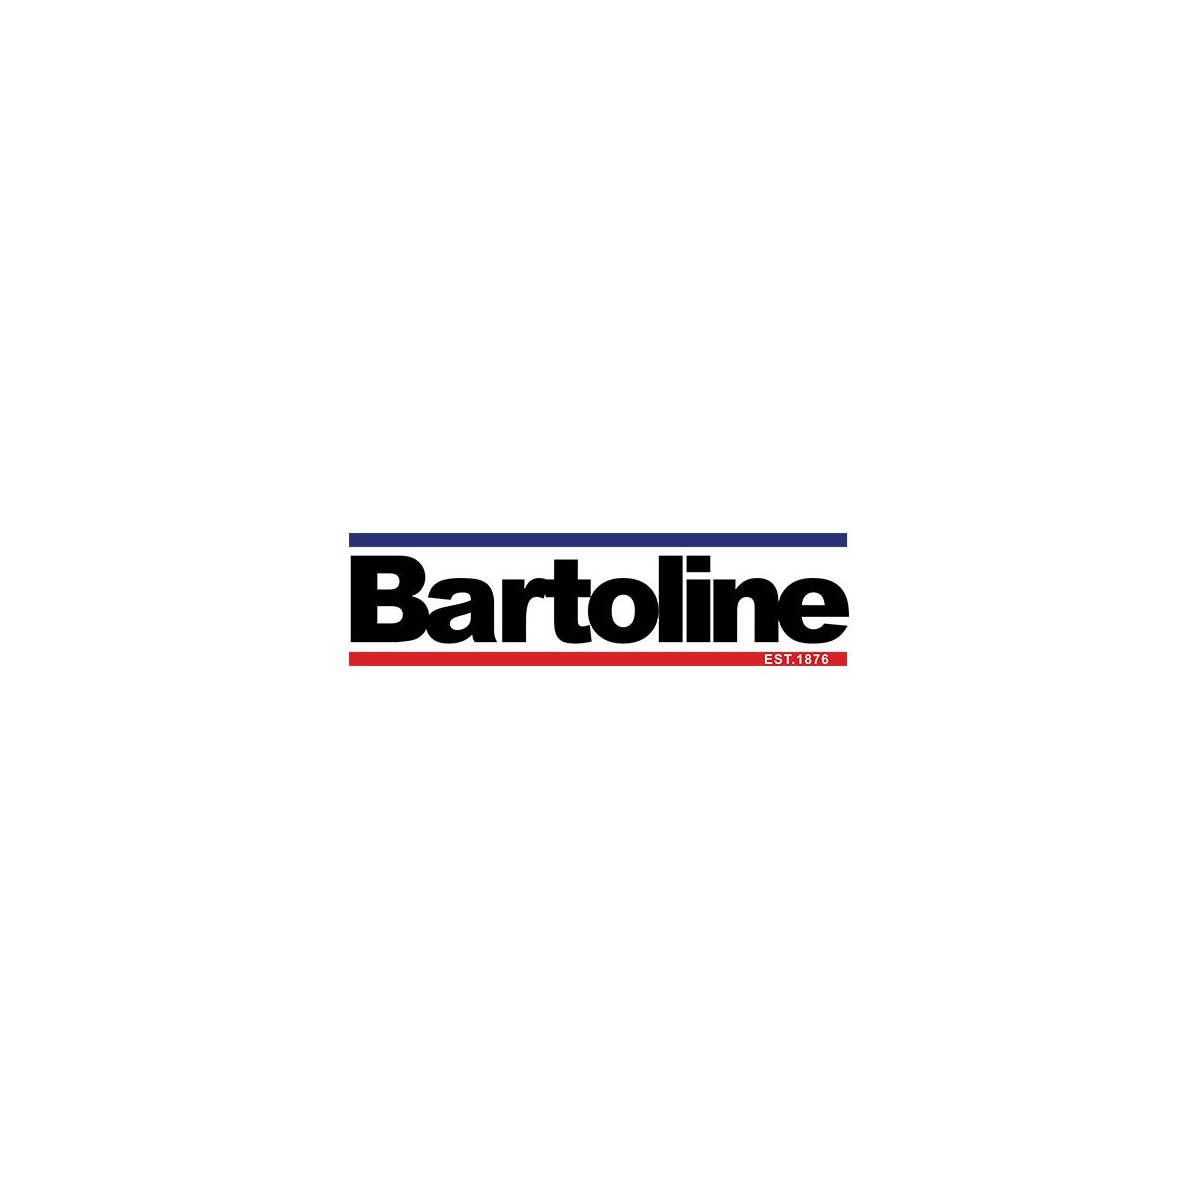 Where to buy Bartoline Creocote